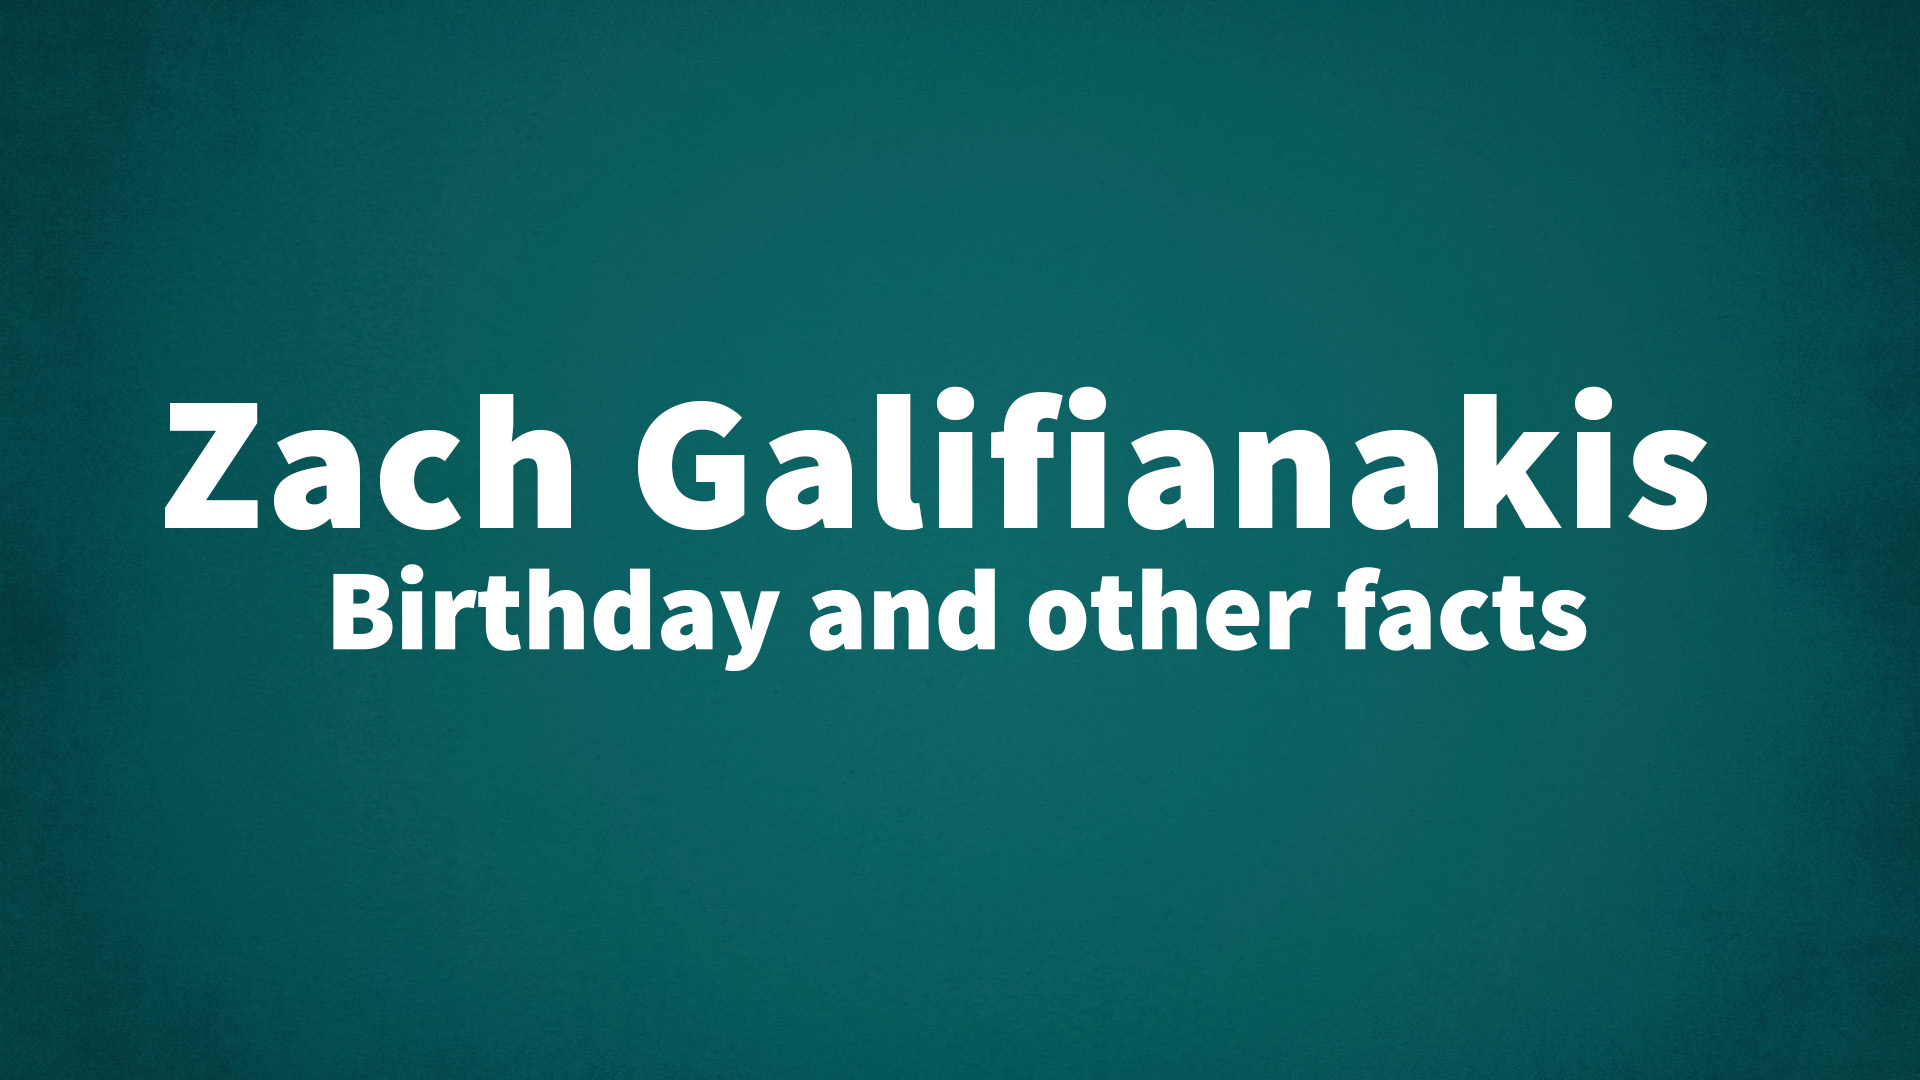 title image for Zach Galifianakis birthday